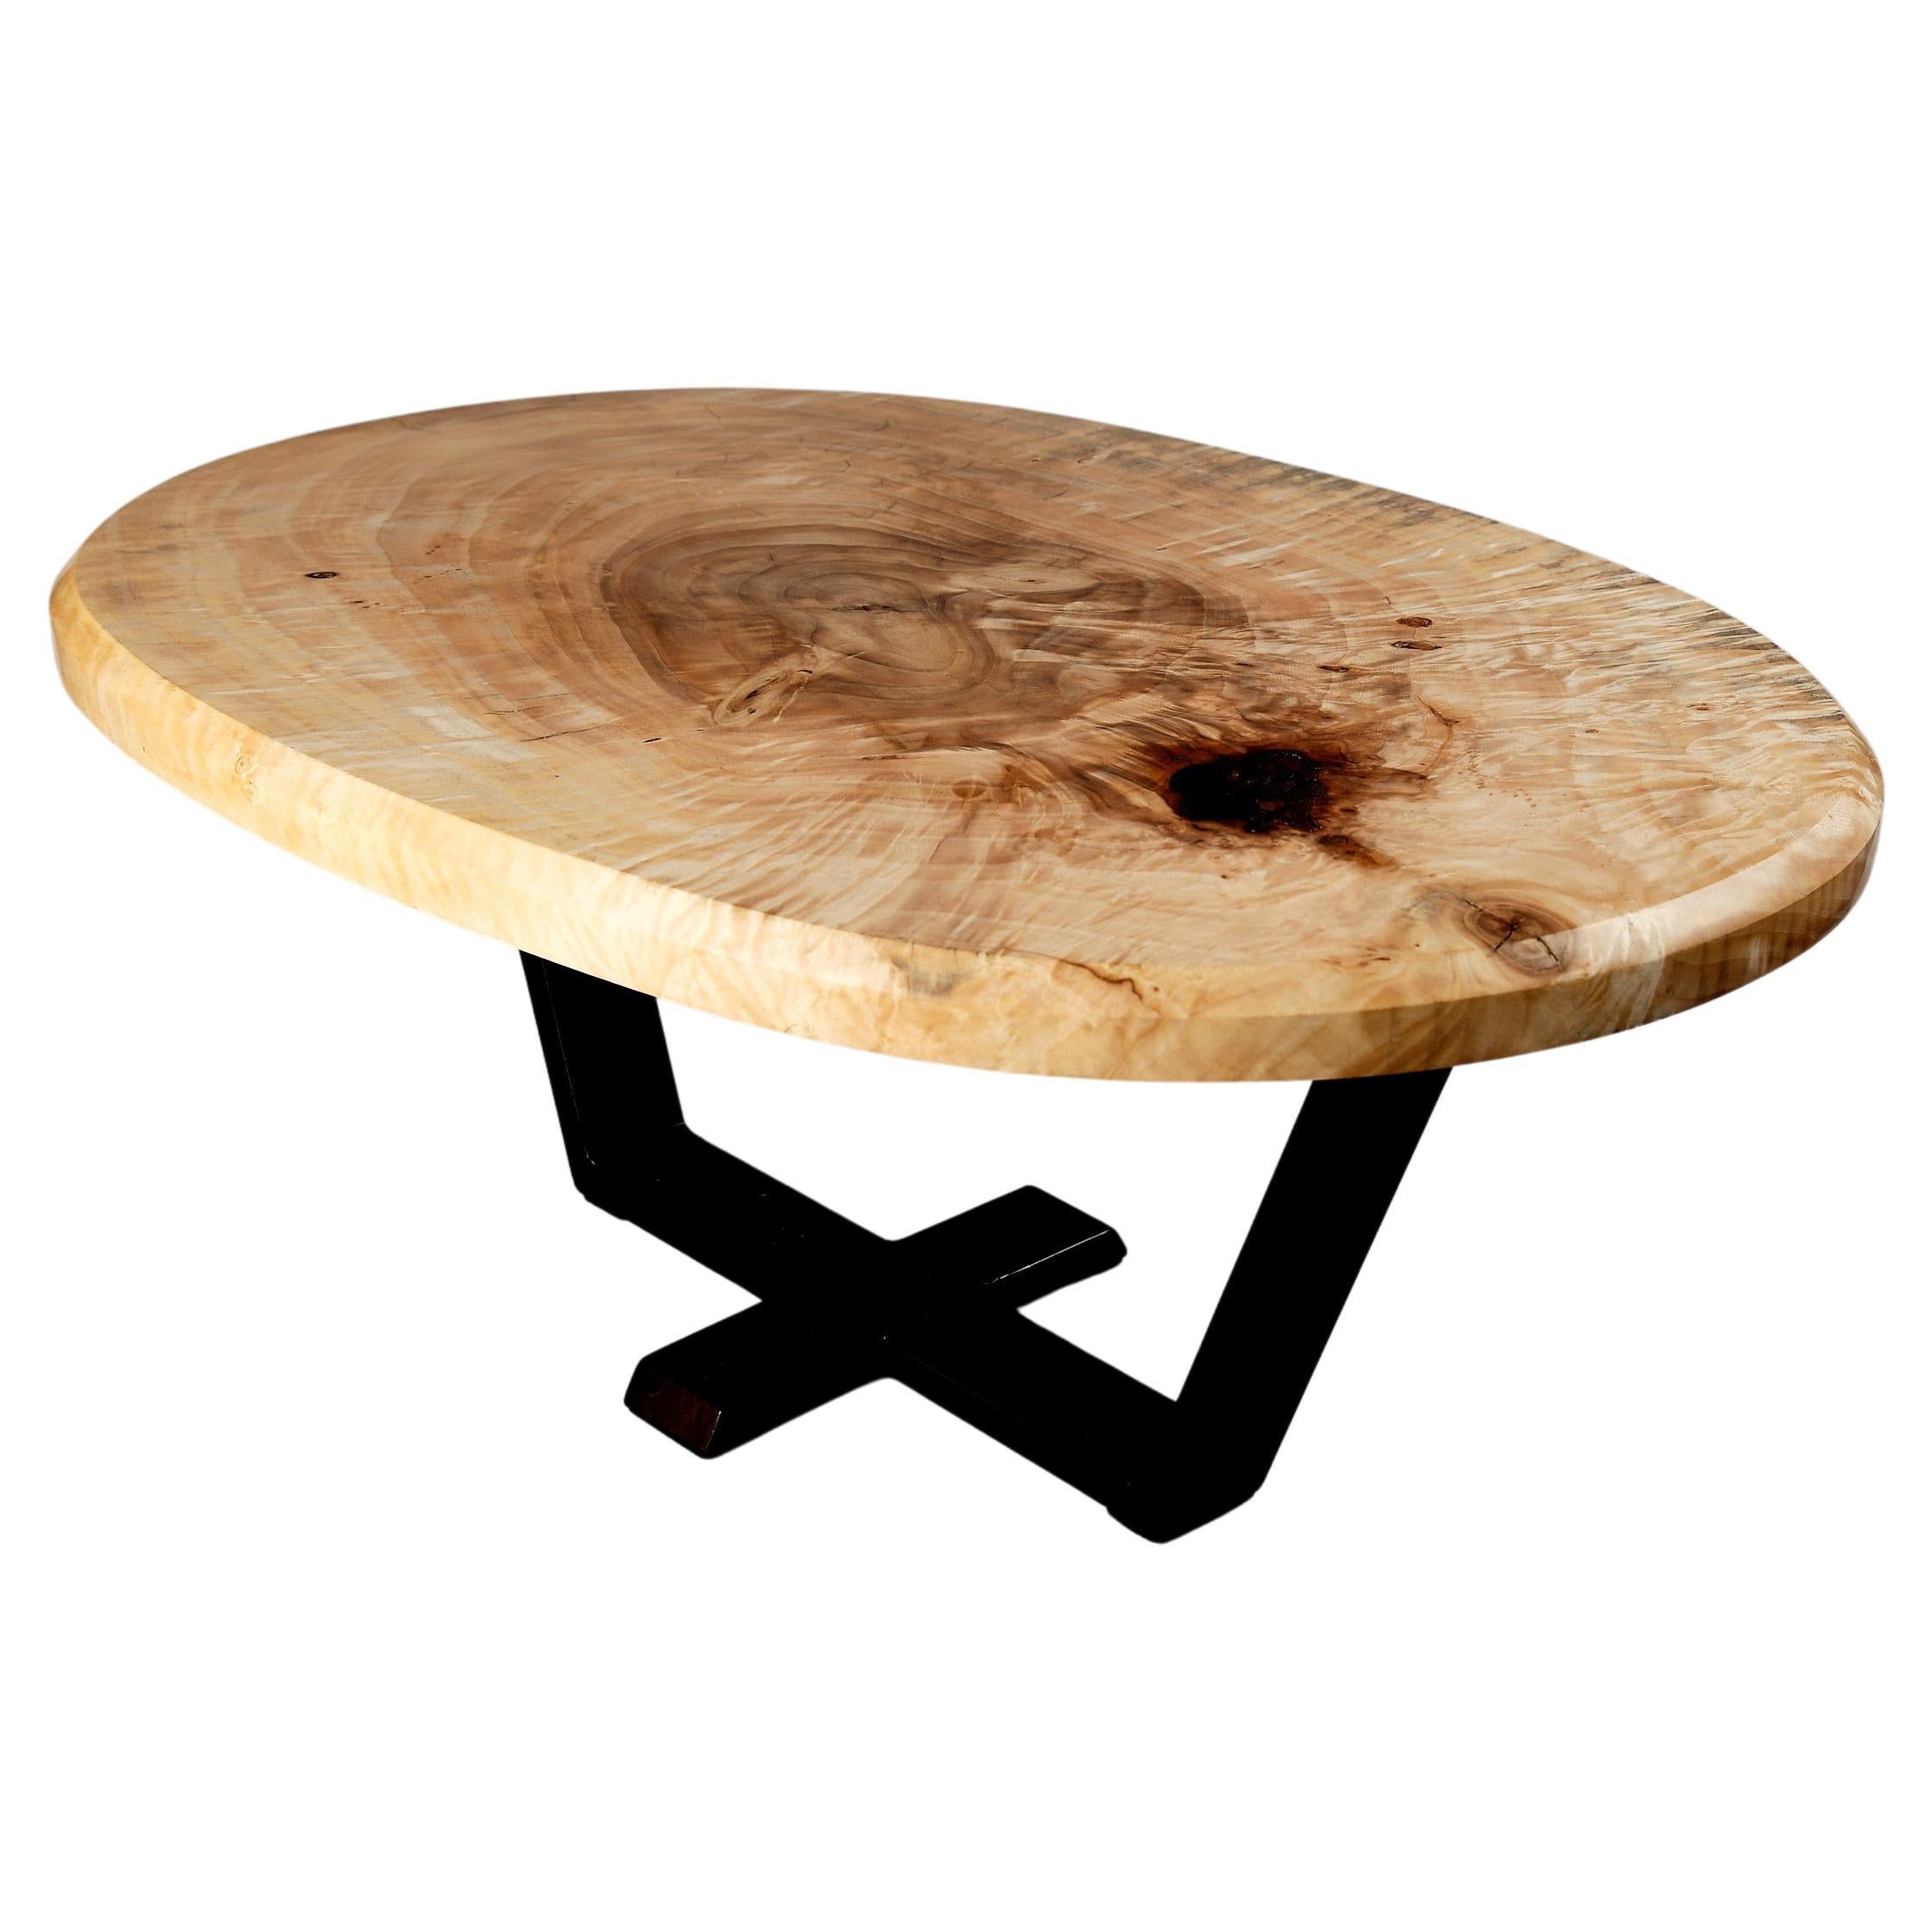 Original Contemporary Design, Burnt Oak with Steel, Unique Side Table, Logniture For Sale